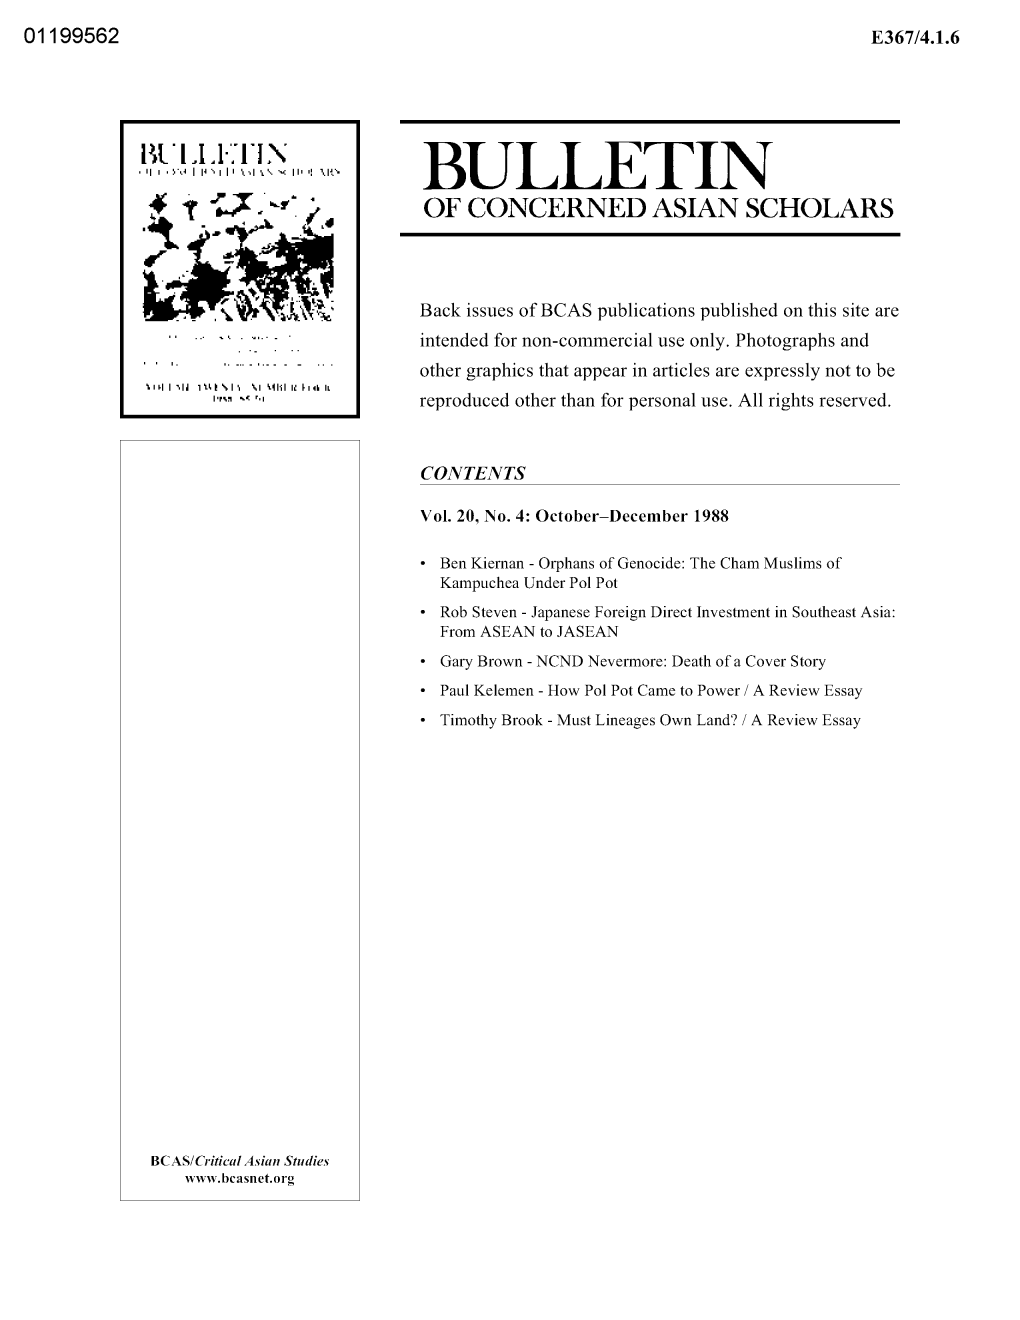 Bulletin of Concerned Asian Scholars